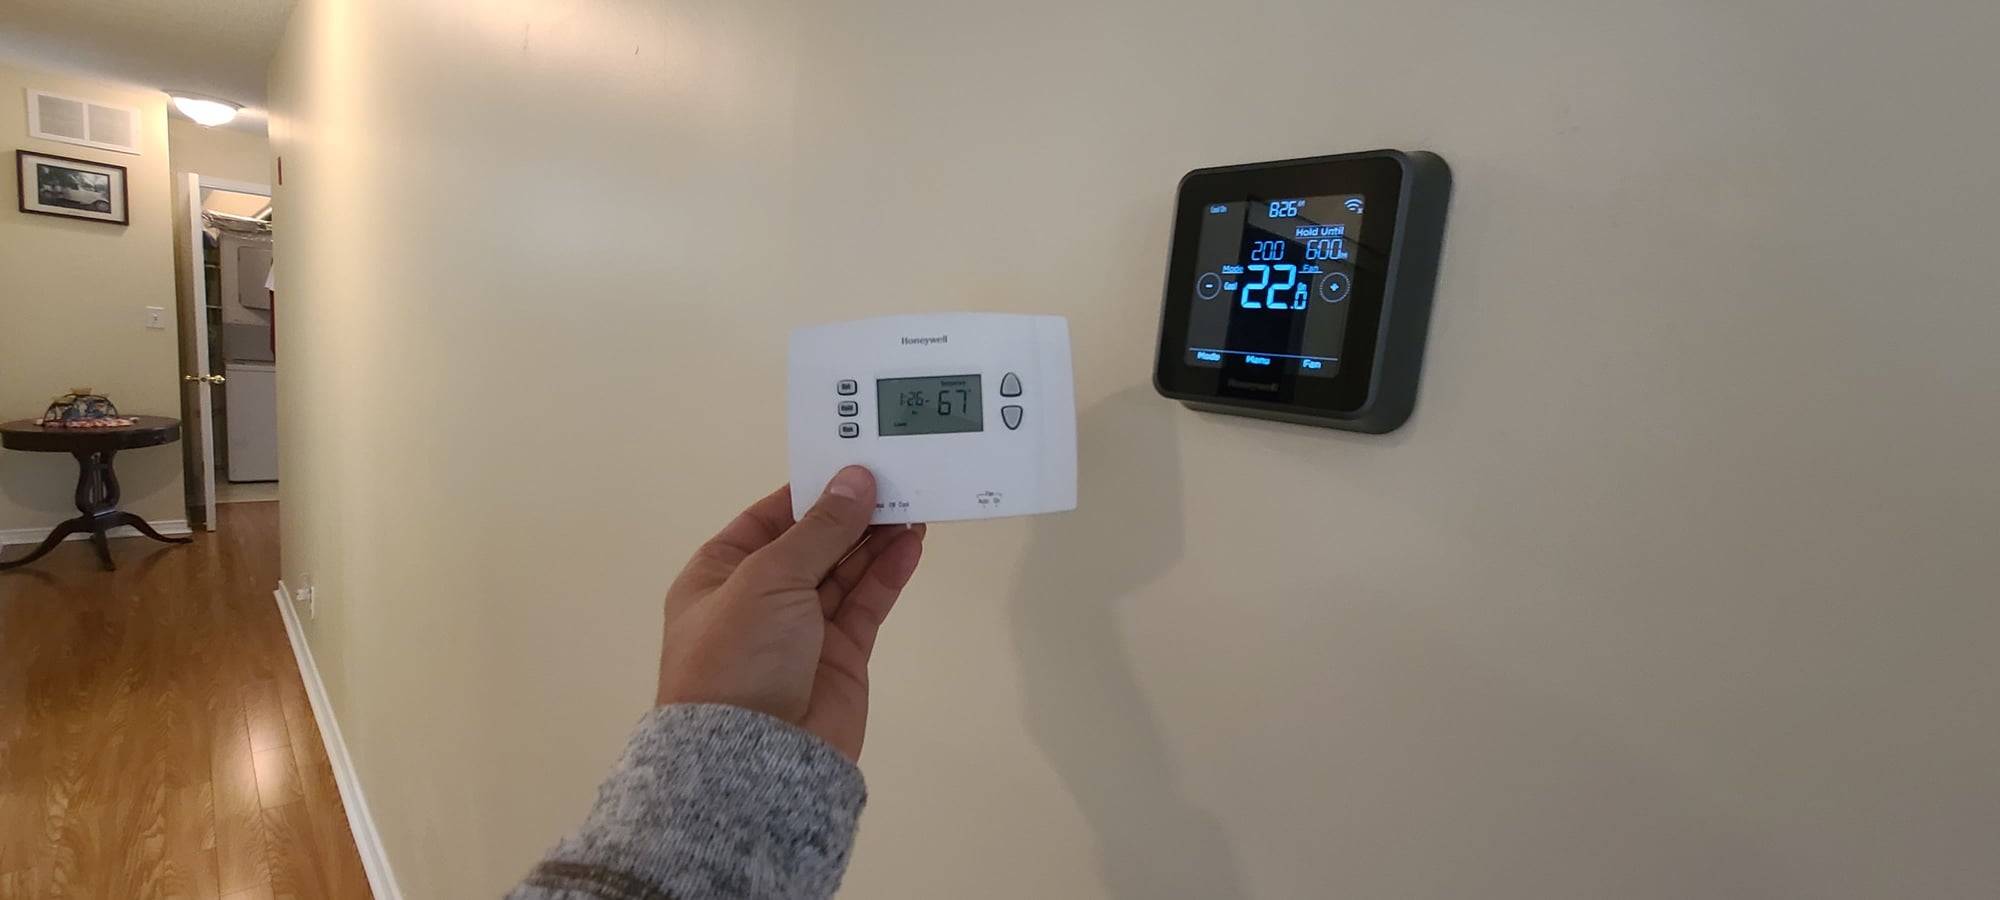 honeywell thermostat wait problem